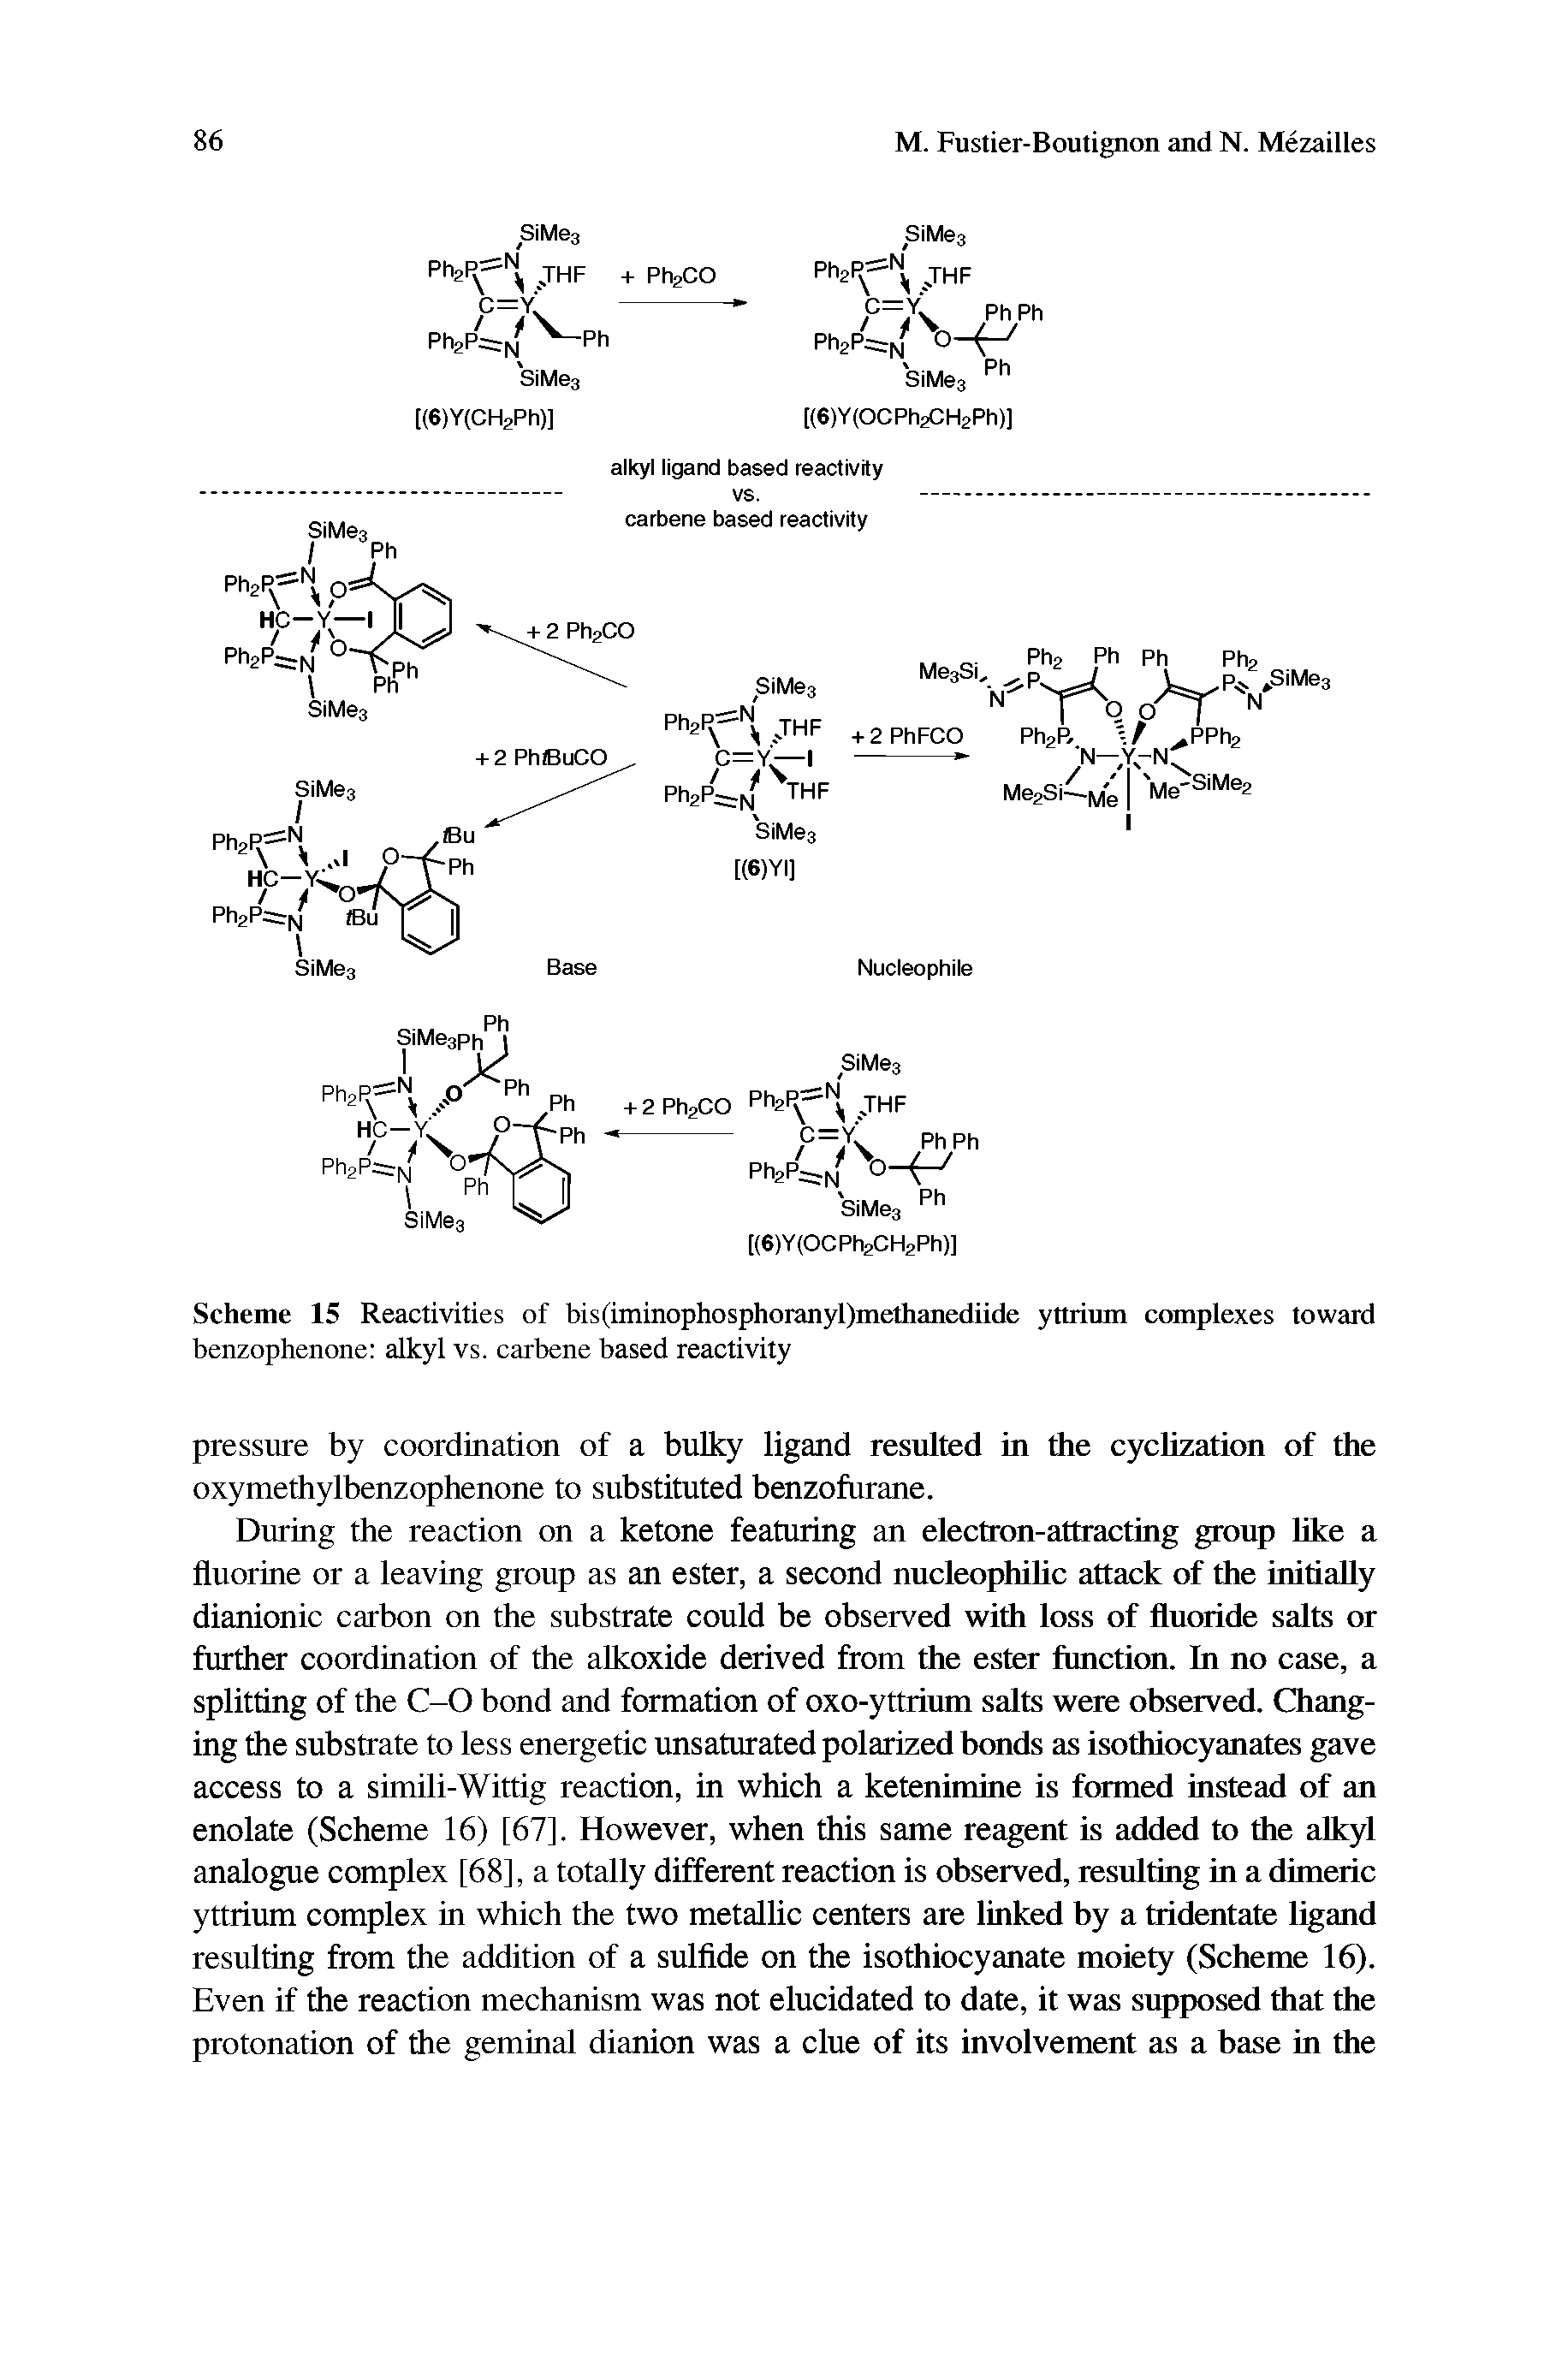 Scheme 15 Reactivities of bis(iminophosphoranyl)methanediide yttrium complexes toward benzophenone alkyl vs. carbene based reactivity...